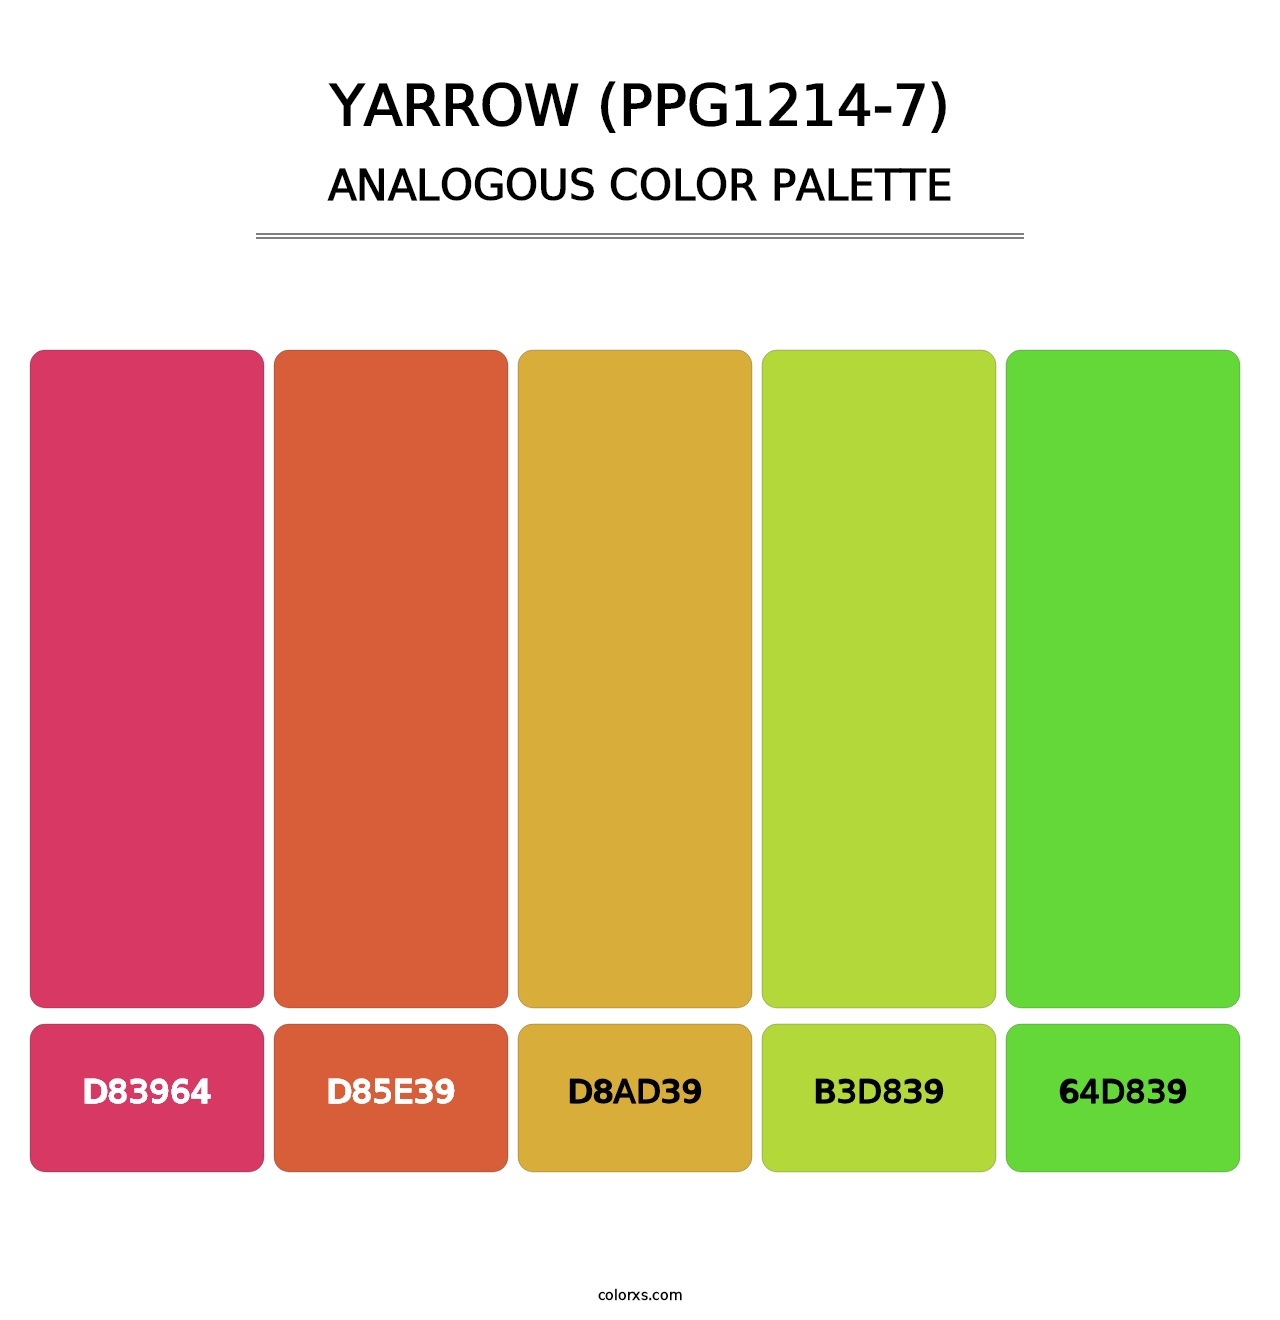 Yarrow (PPG1214-7) - Analogous Color Palette